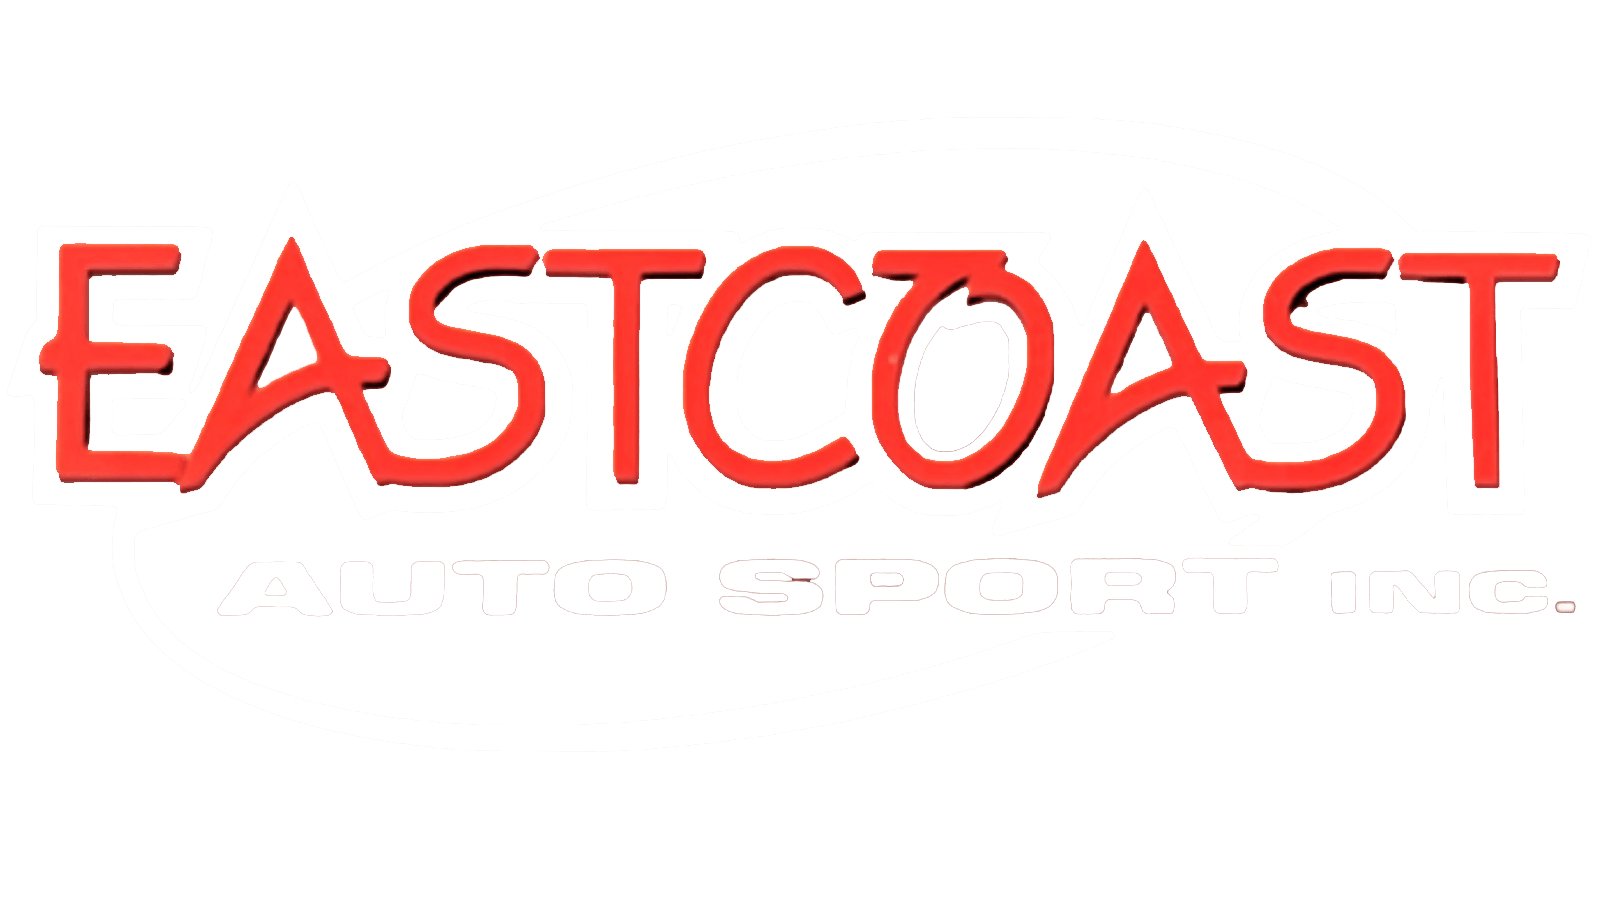 Eastcoast Auto Sport Inc, in North Arlington, NJ